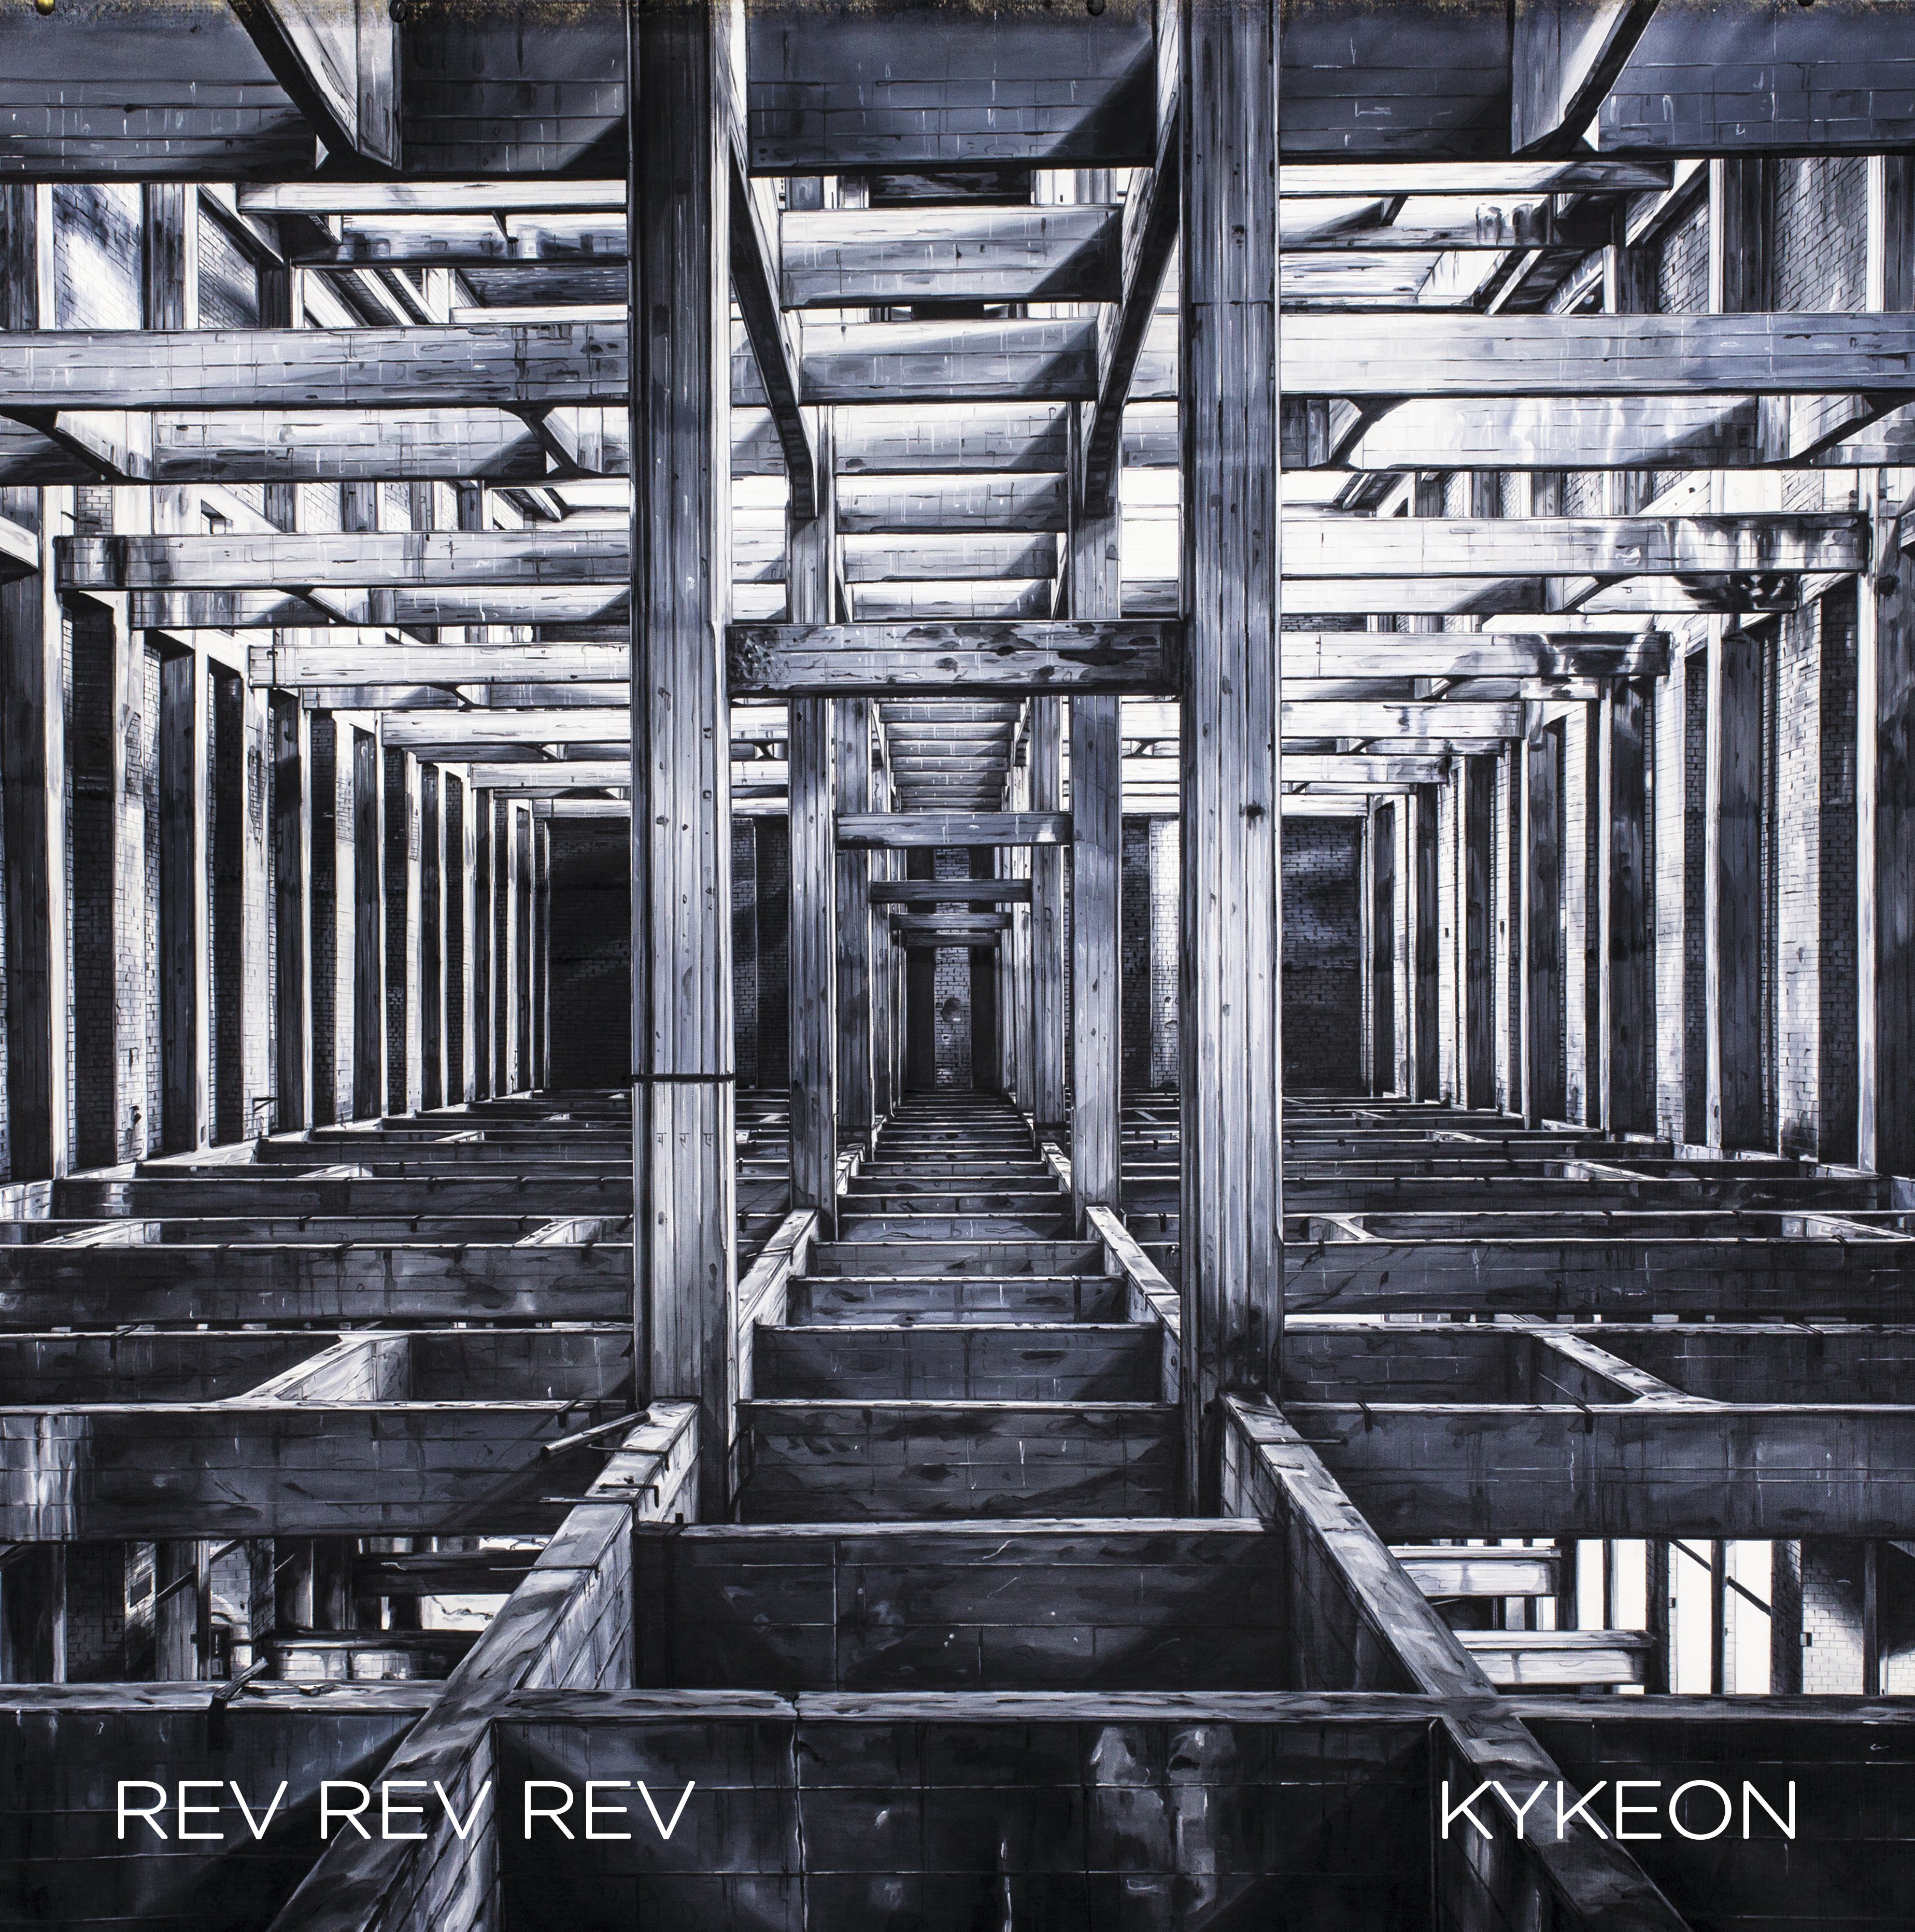 Rev Rev Rev - Kykeon